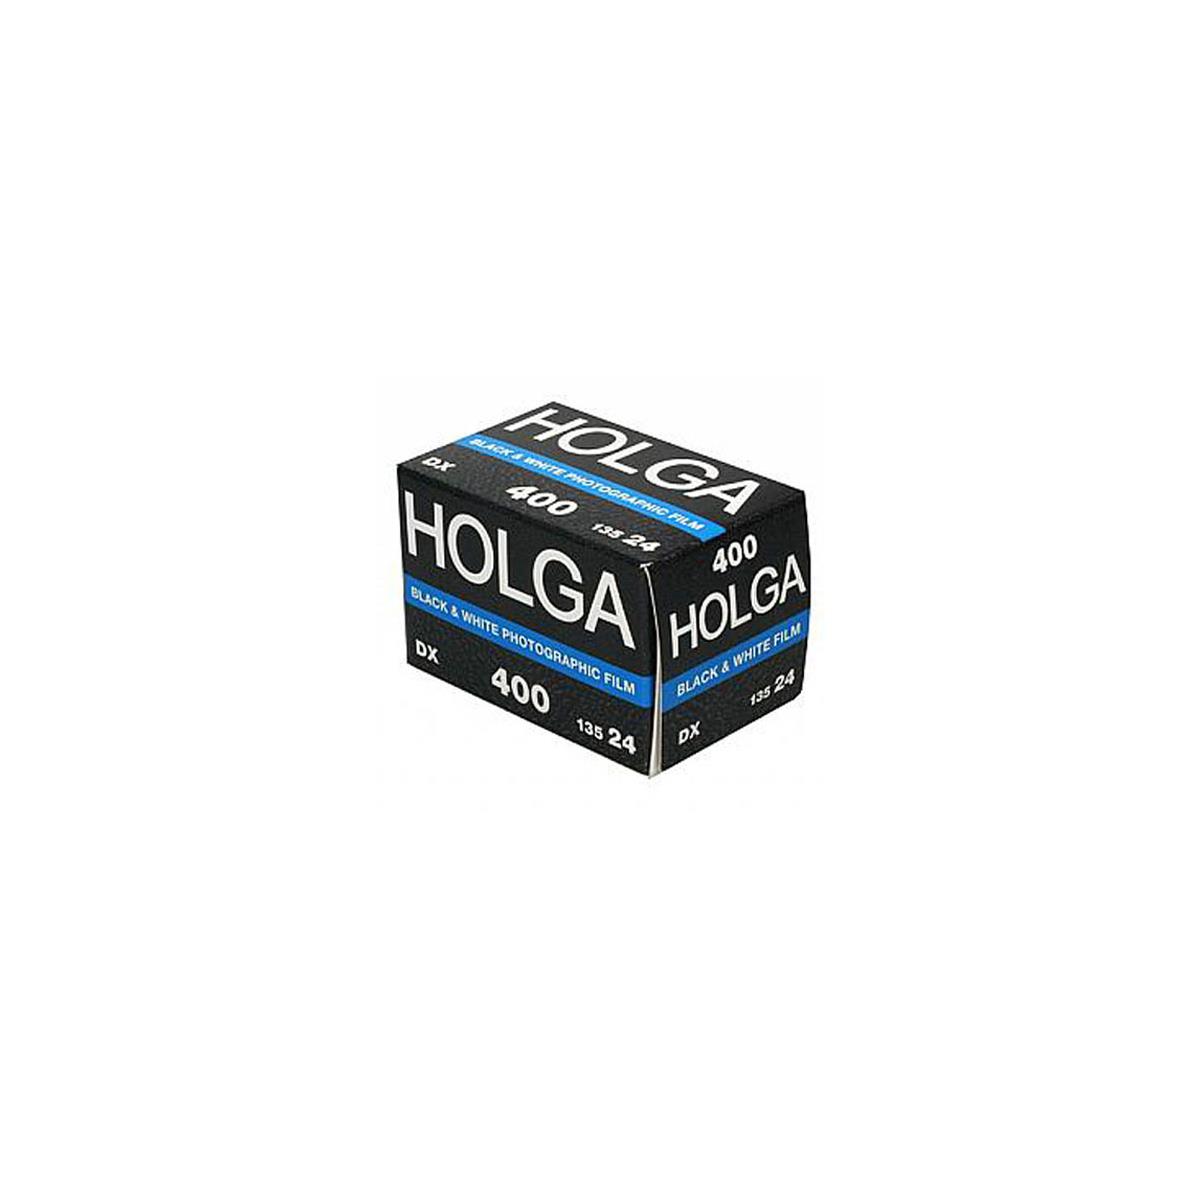 Image of Holga 135-24 Black and White Film